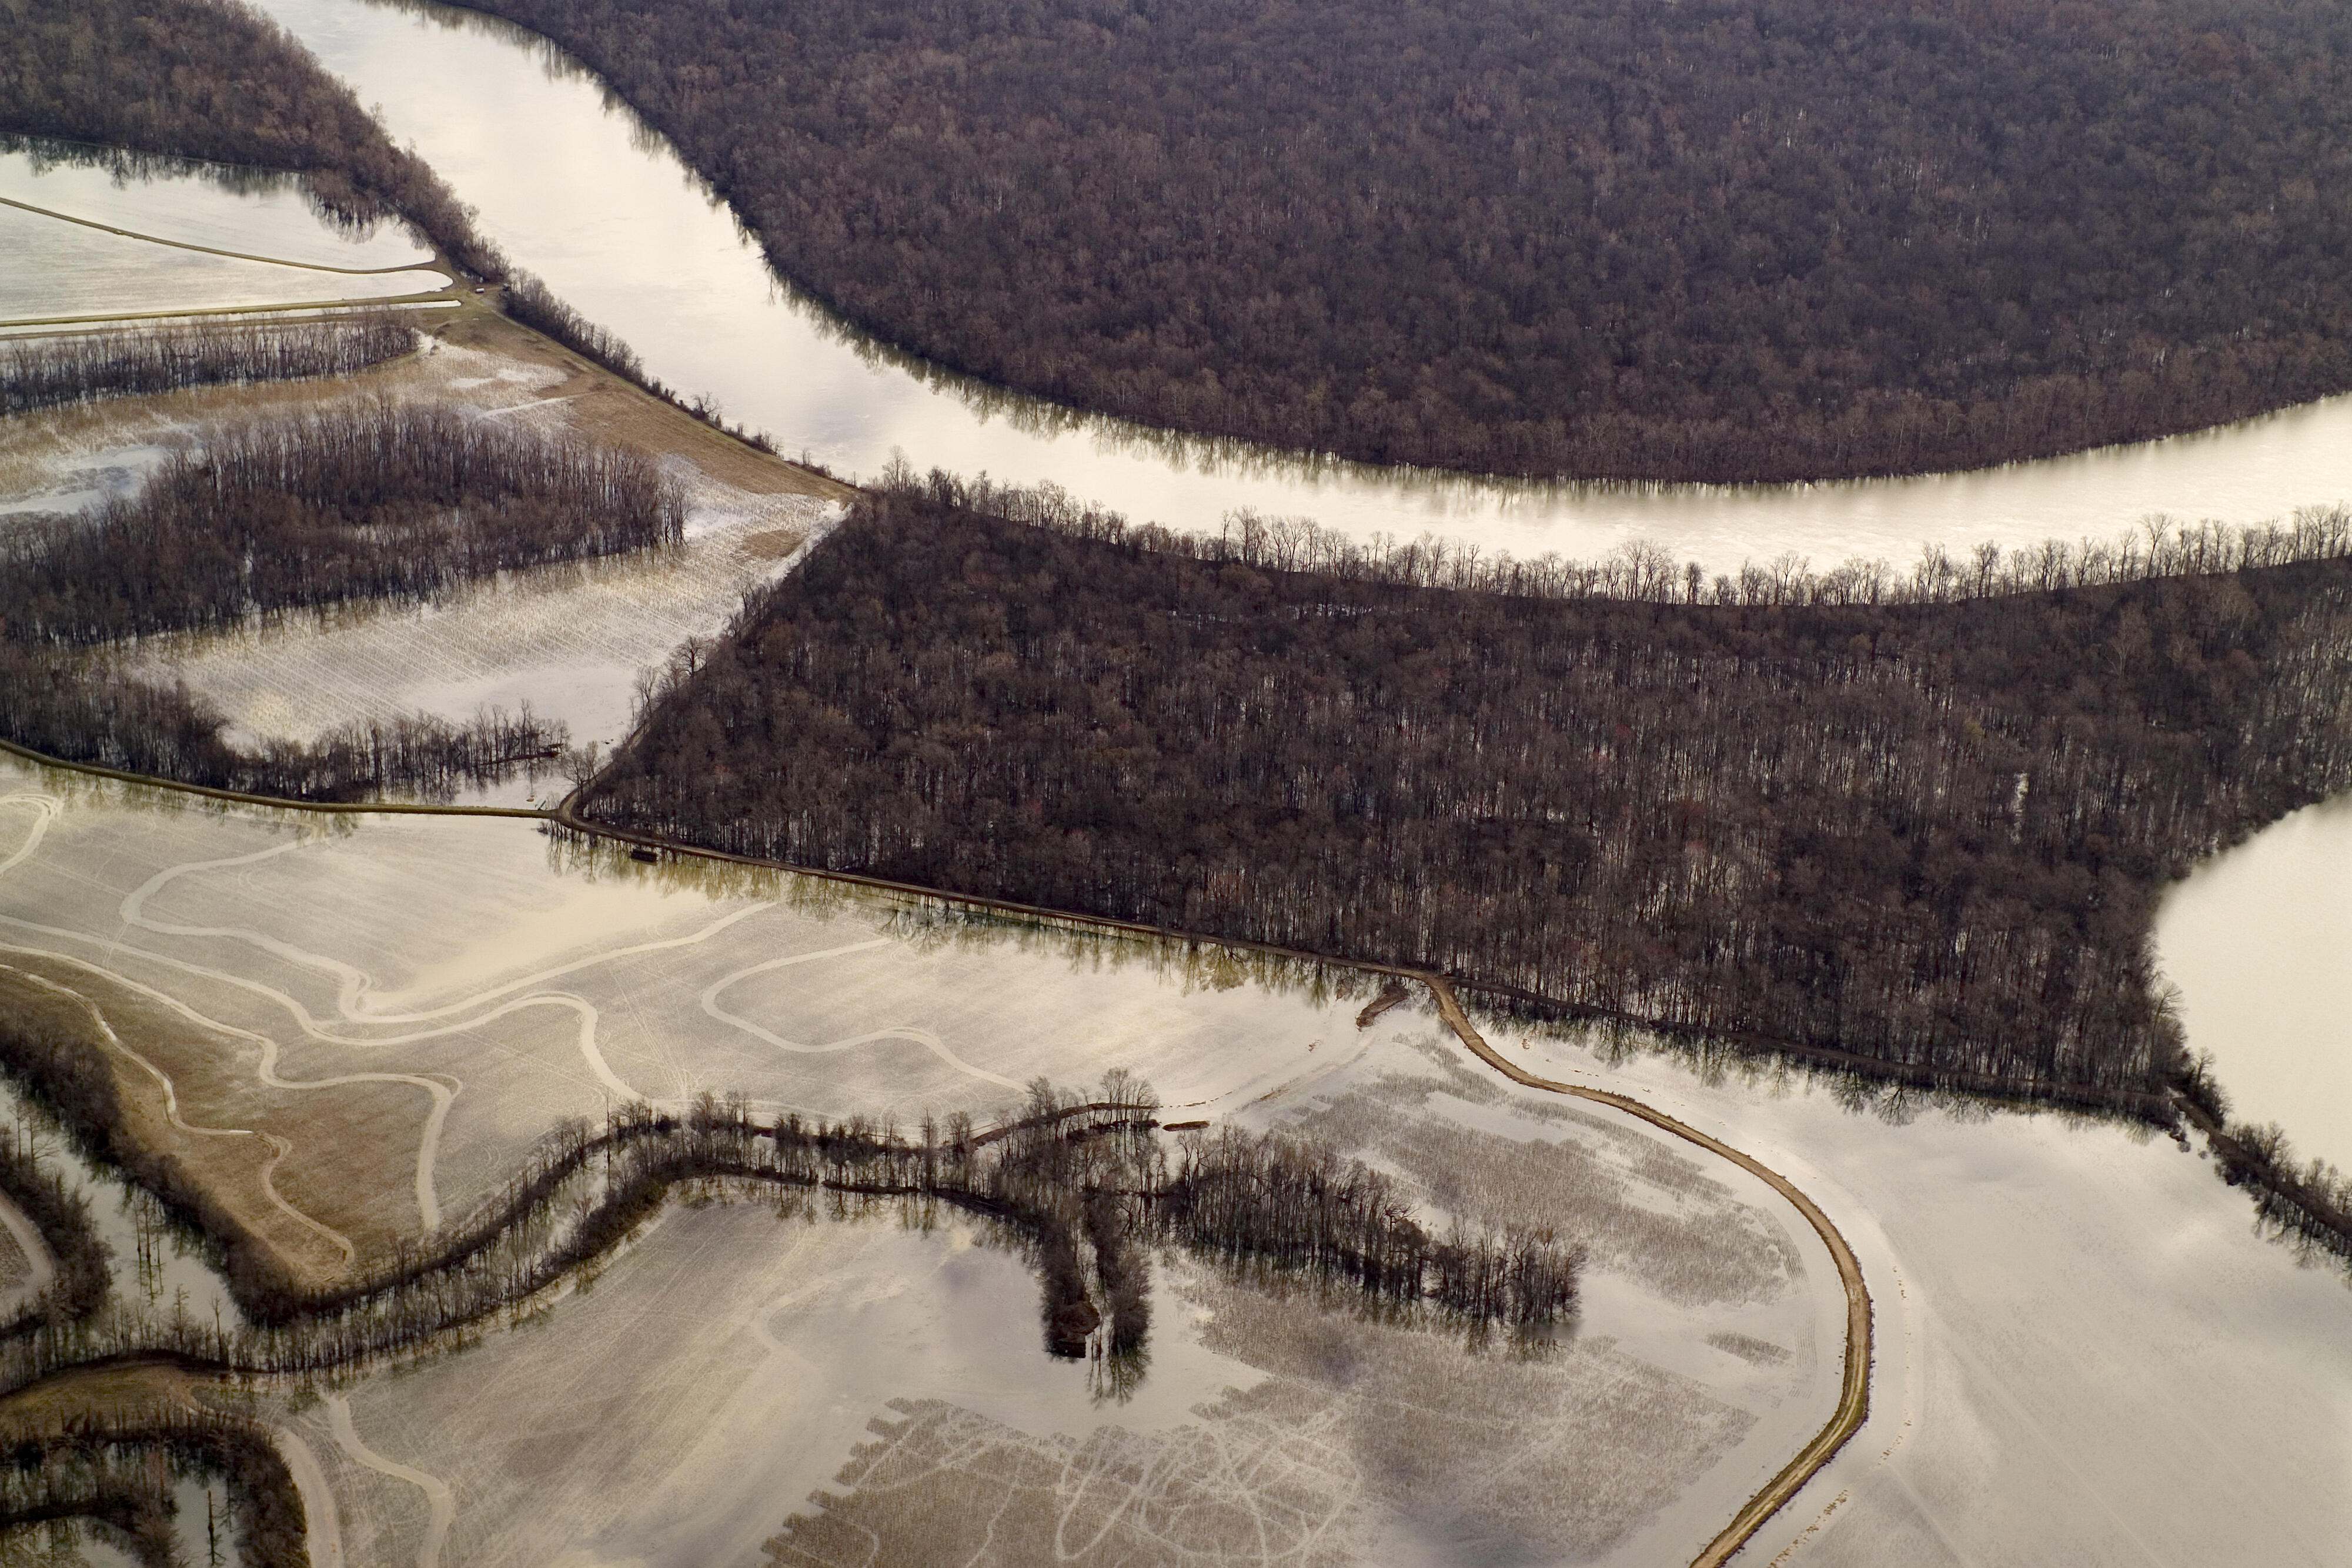 Farmland in Arkansas with a river cutting through it.